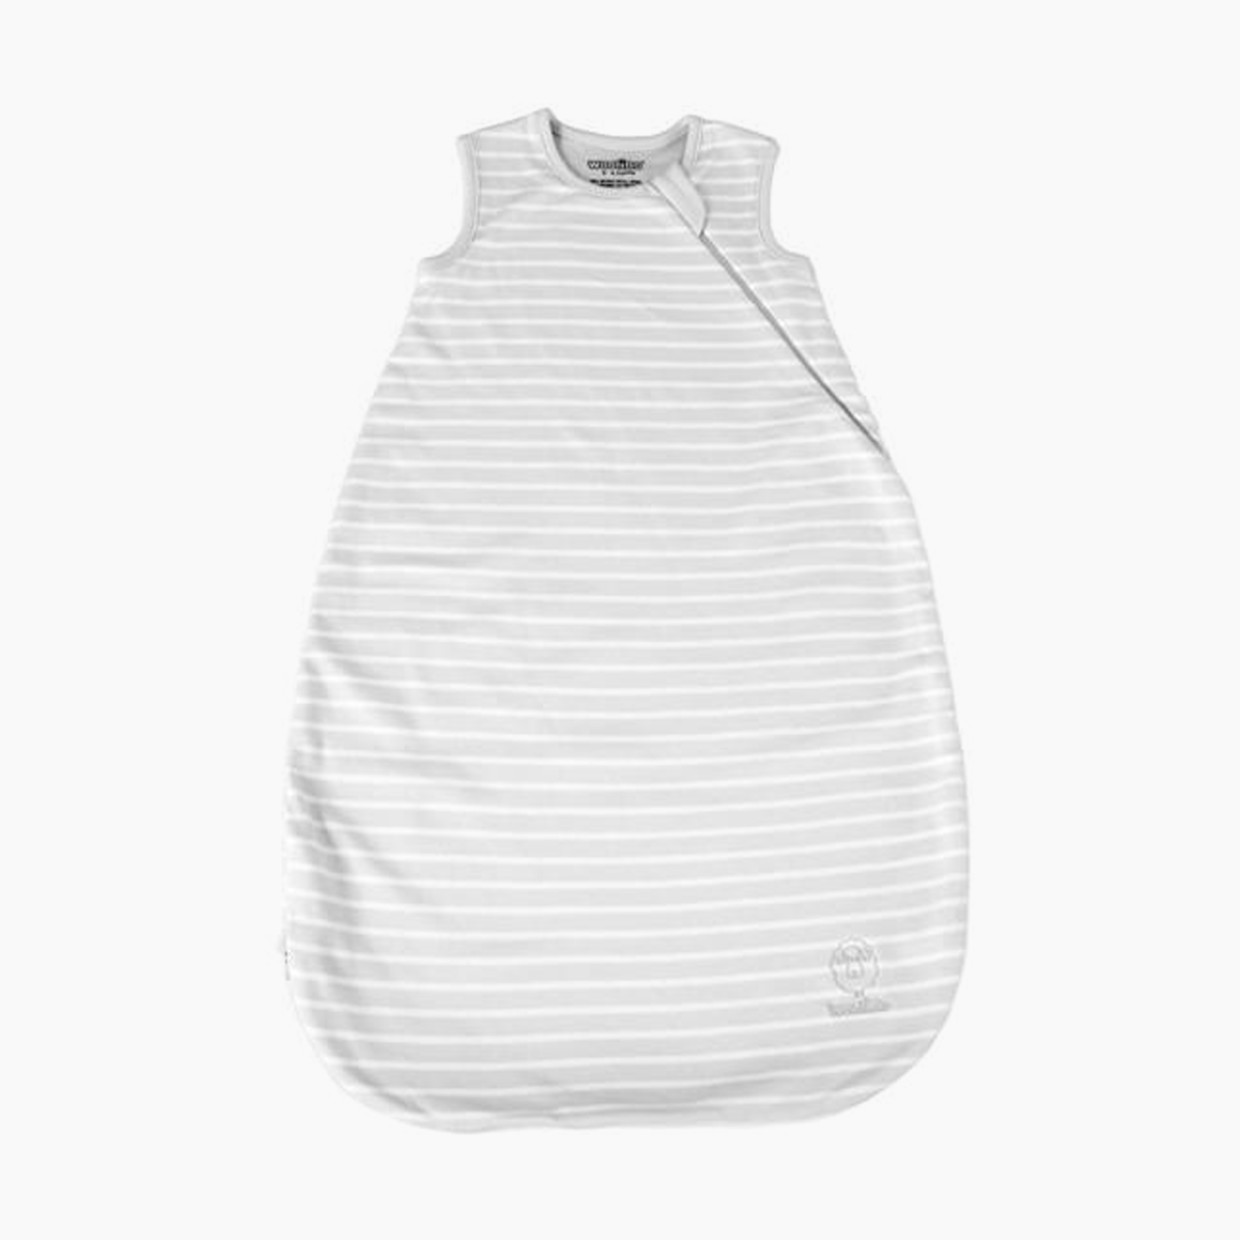 Woolino 4 Season Basic Baby Sleep Bag - Gray, 6-18 Months.